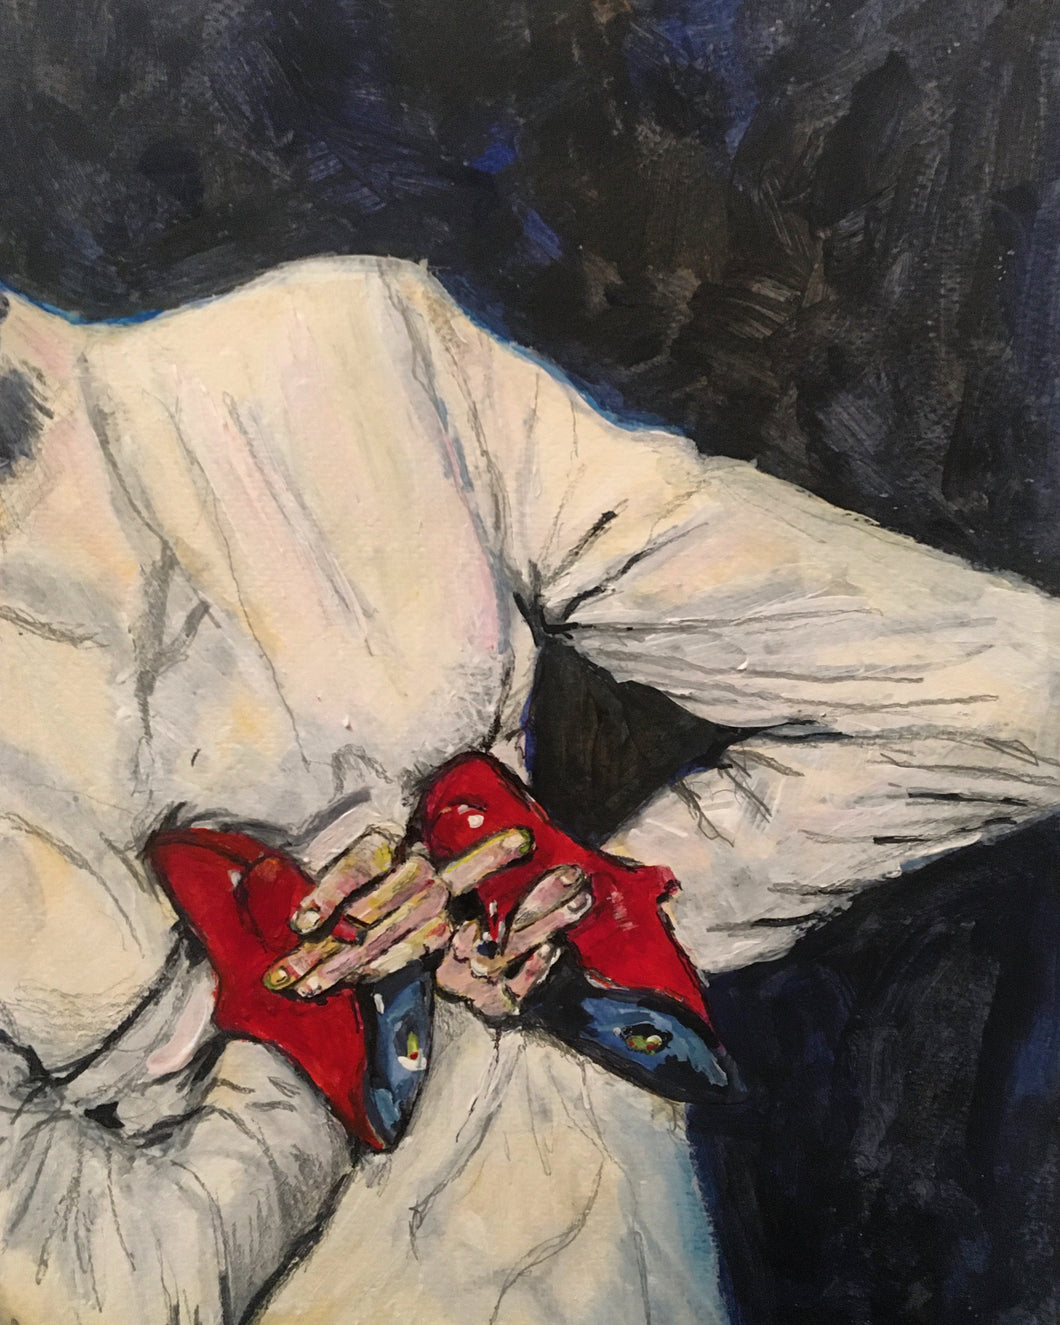 MAISON MARGIELA - 'Red Tango Pumps'S.W.A.L.K. II S/S ’21 painting